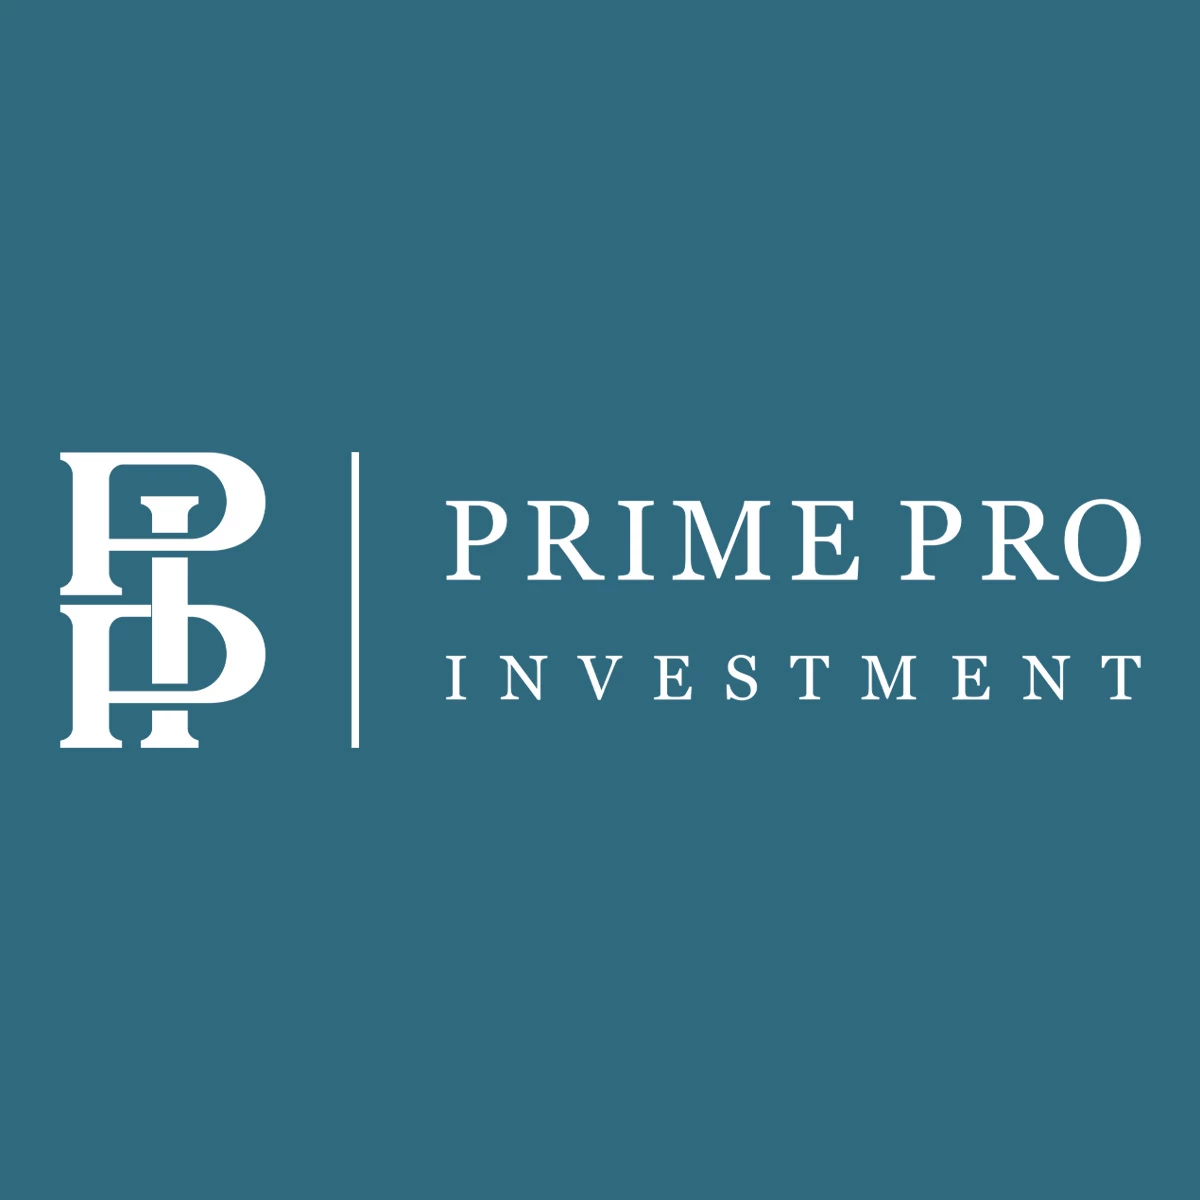 Prime Pro Investment